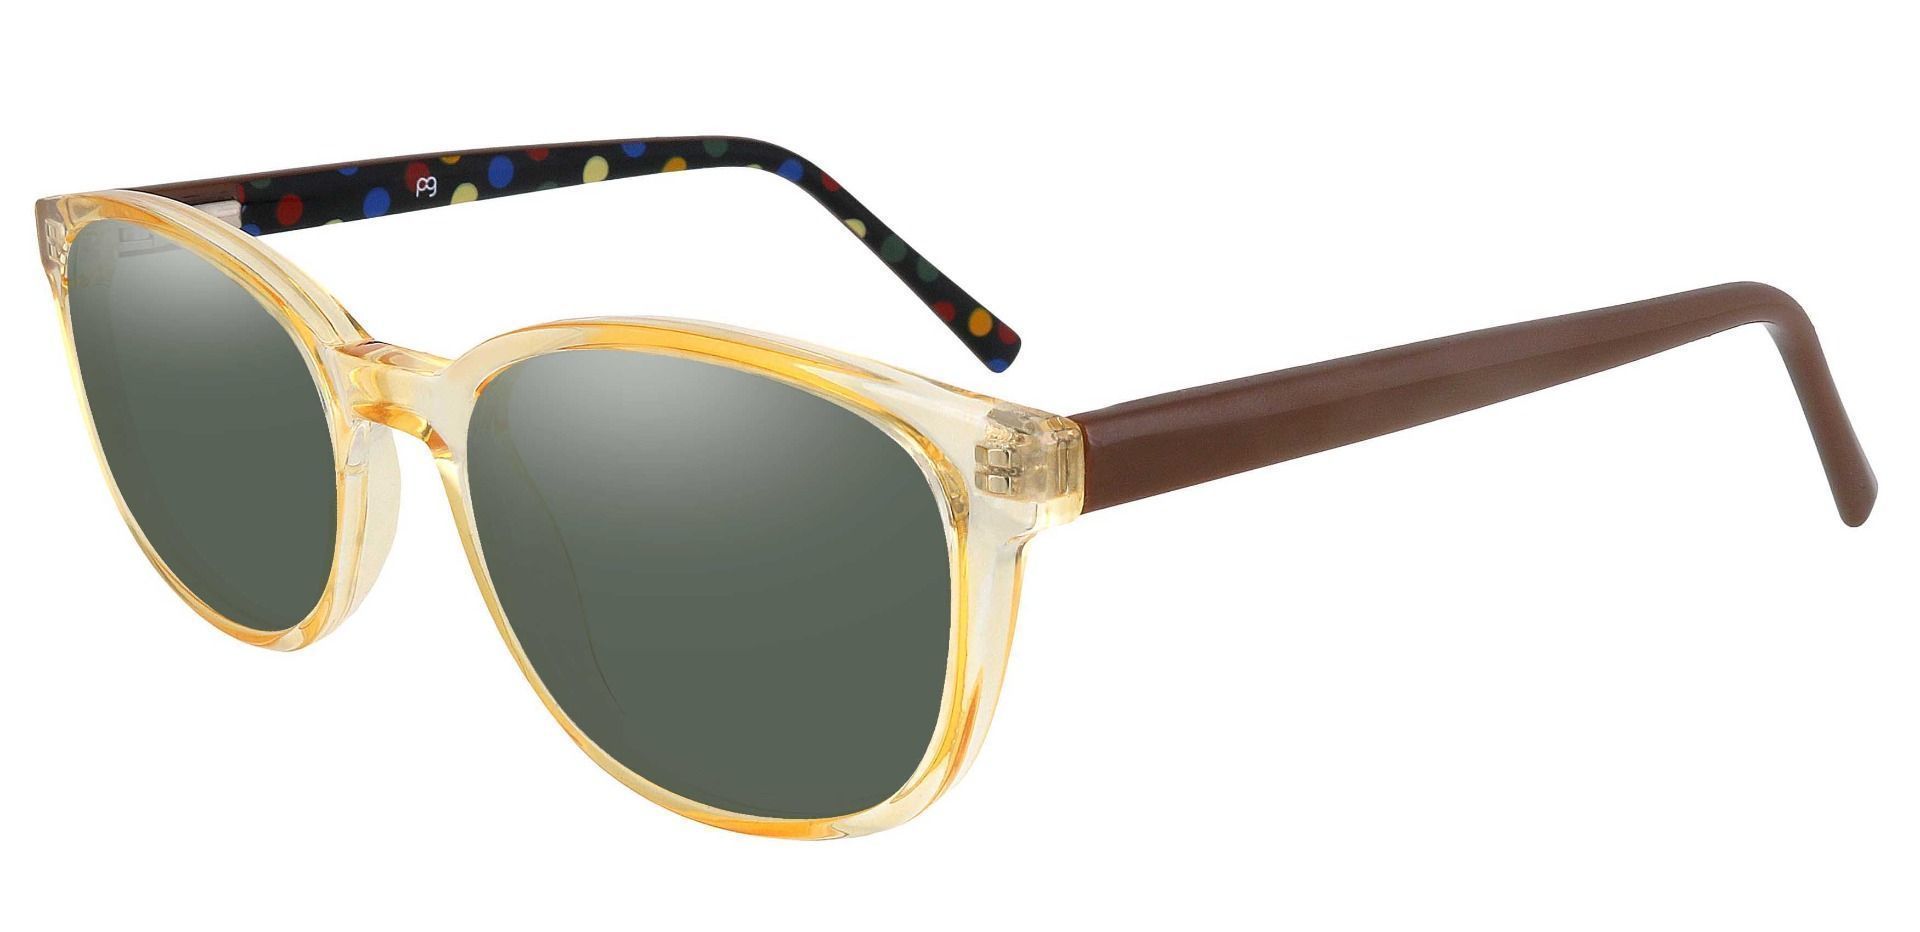 Branson Rectangle Prescription Sunglasses - Brown Frame With Green Lenses